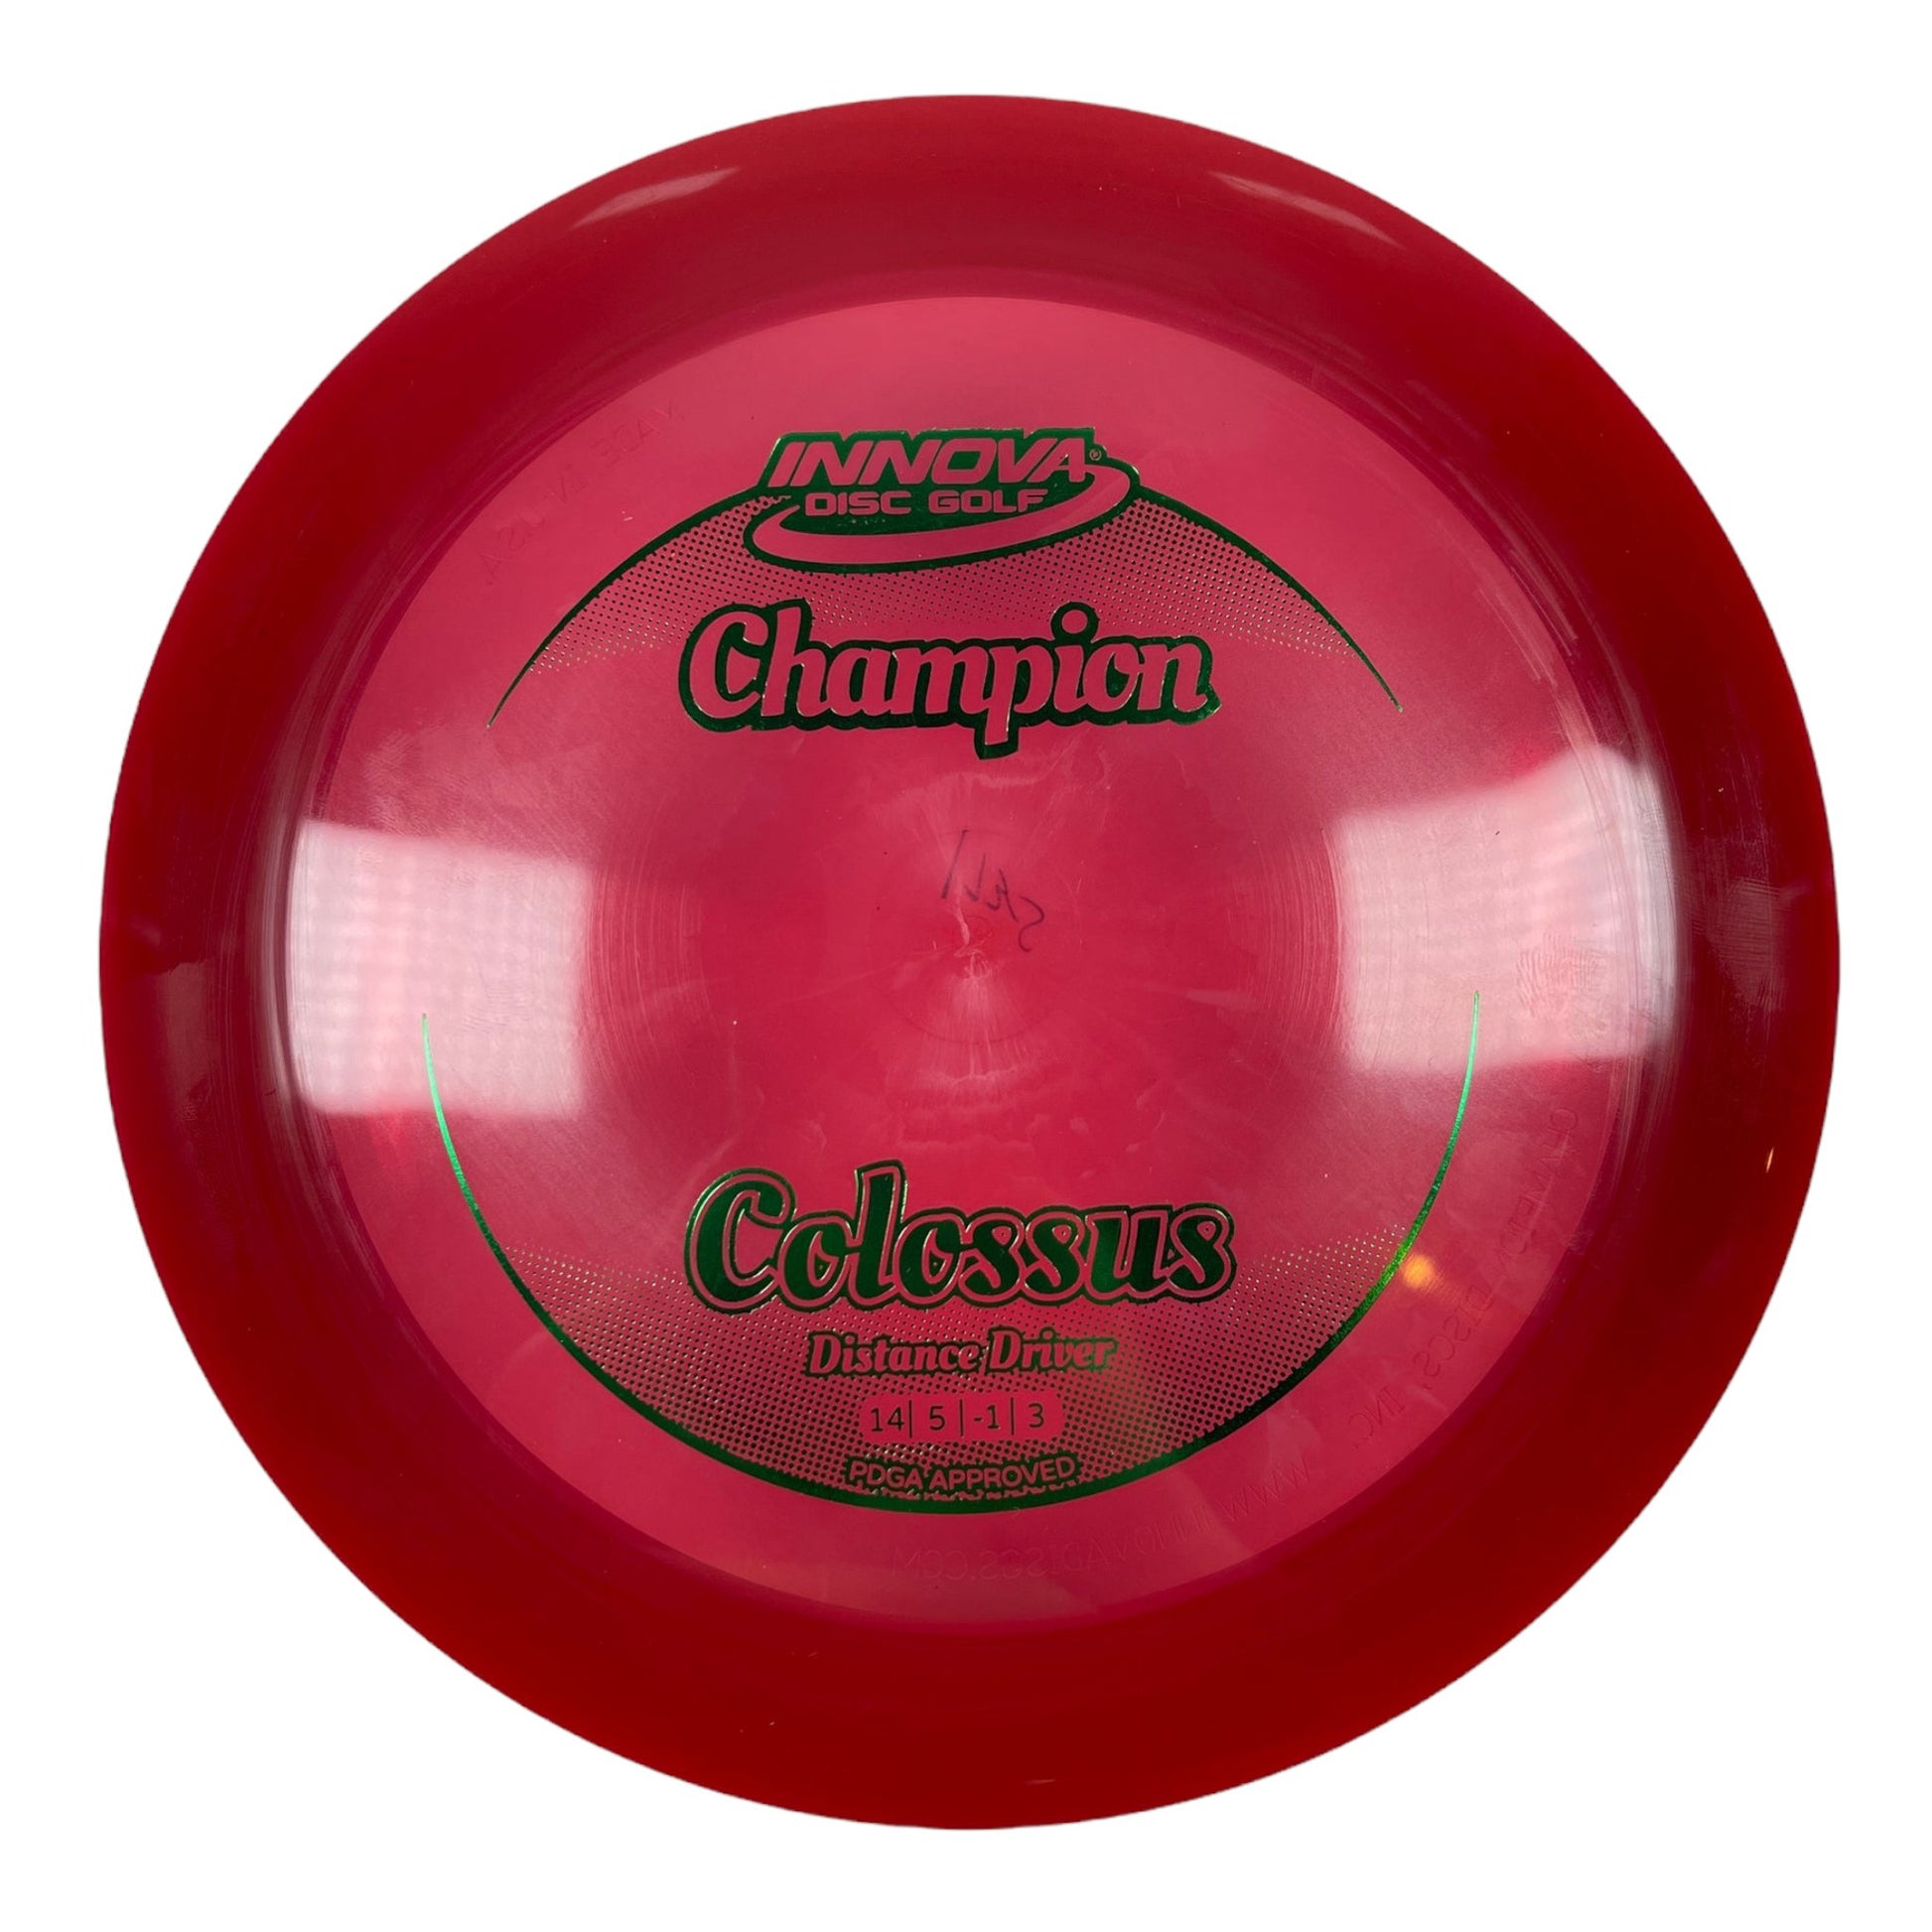 Innova Champion Discs Colossus | Champion | Red/Green 175g Disc Golf